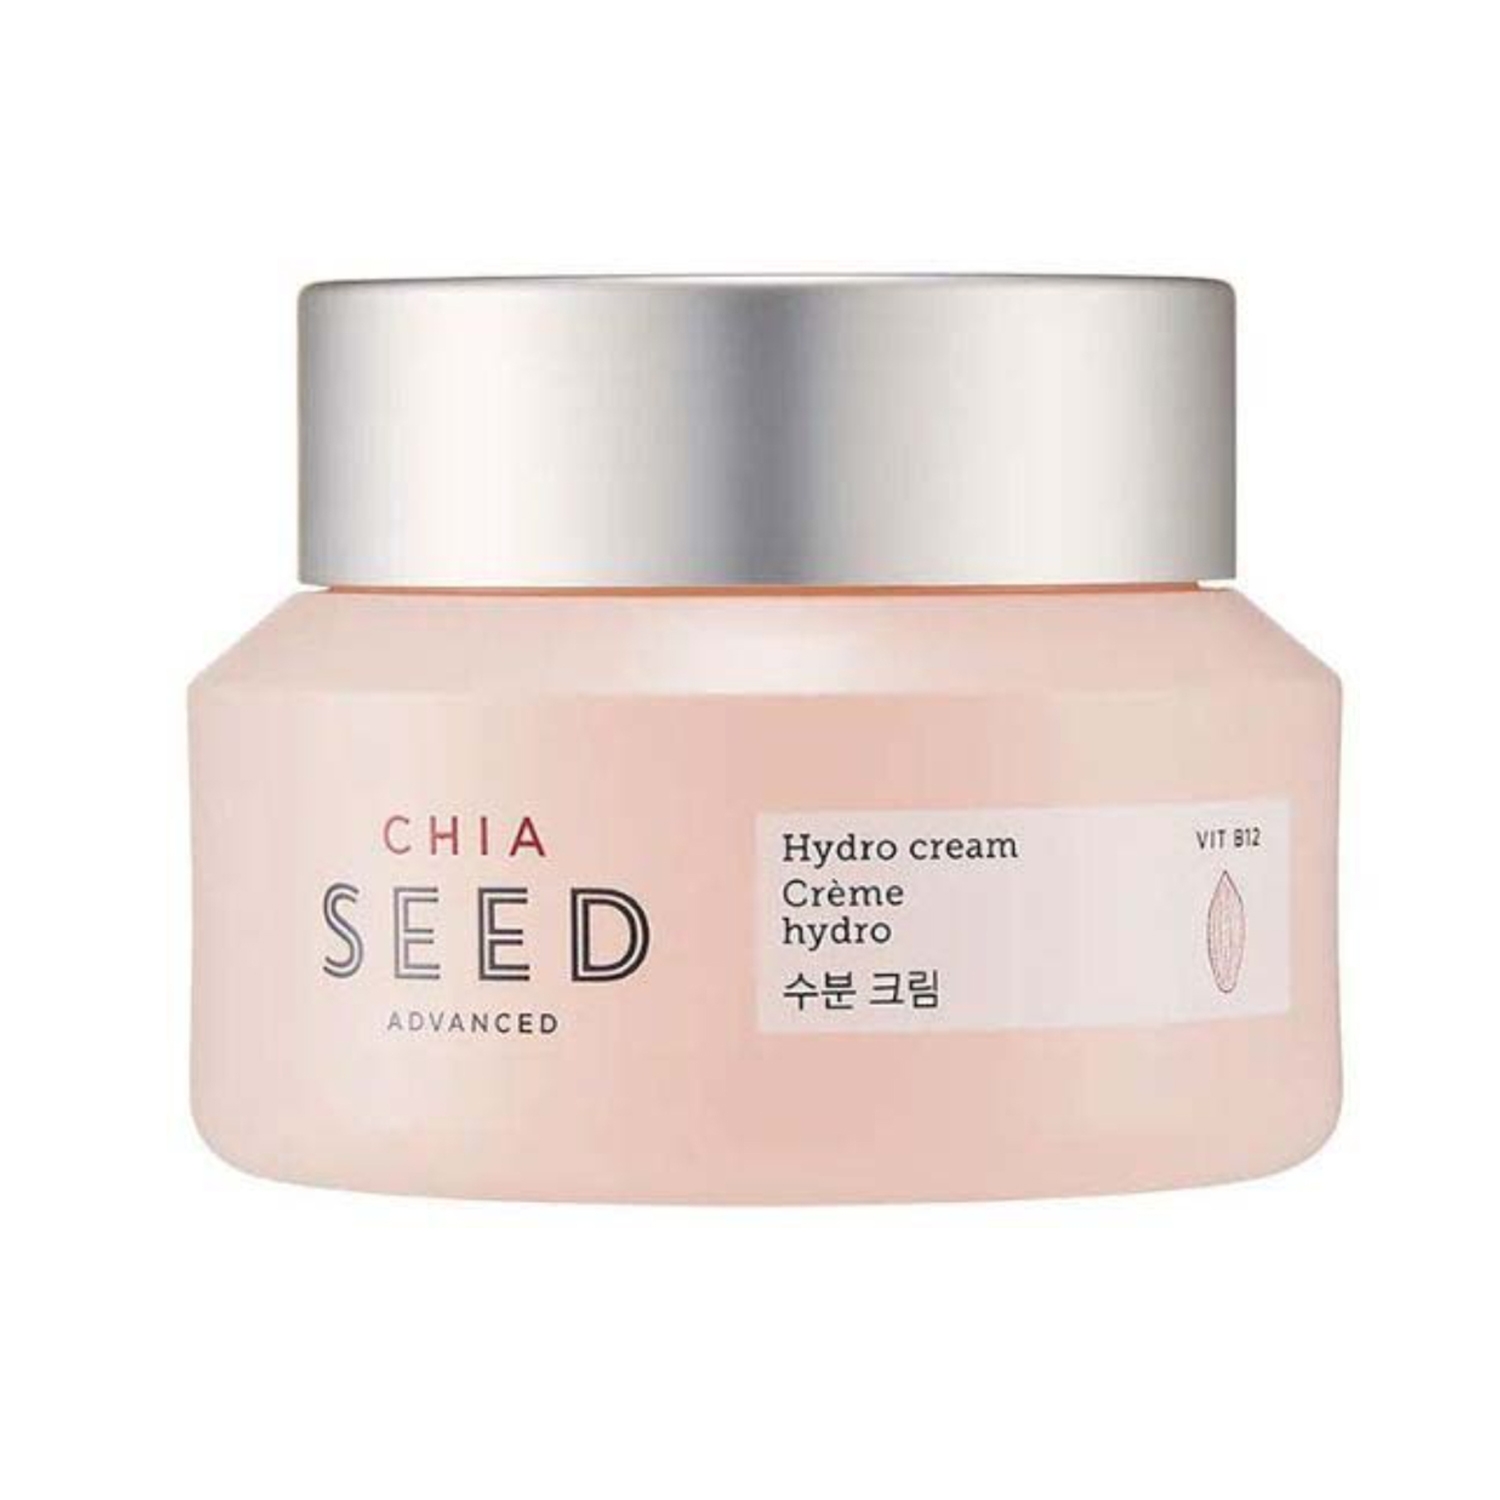 The Face Shop | The Face Shop Chia Seed Advanced Hydro Cream (50ml)